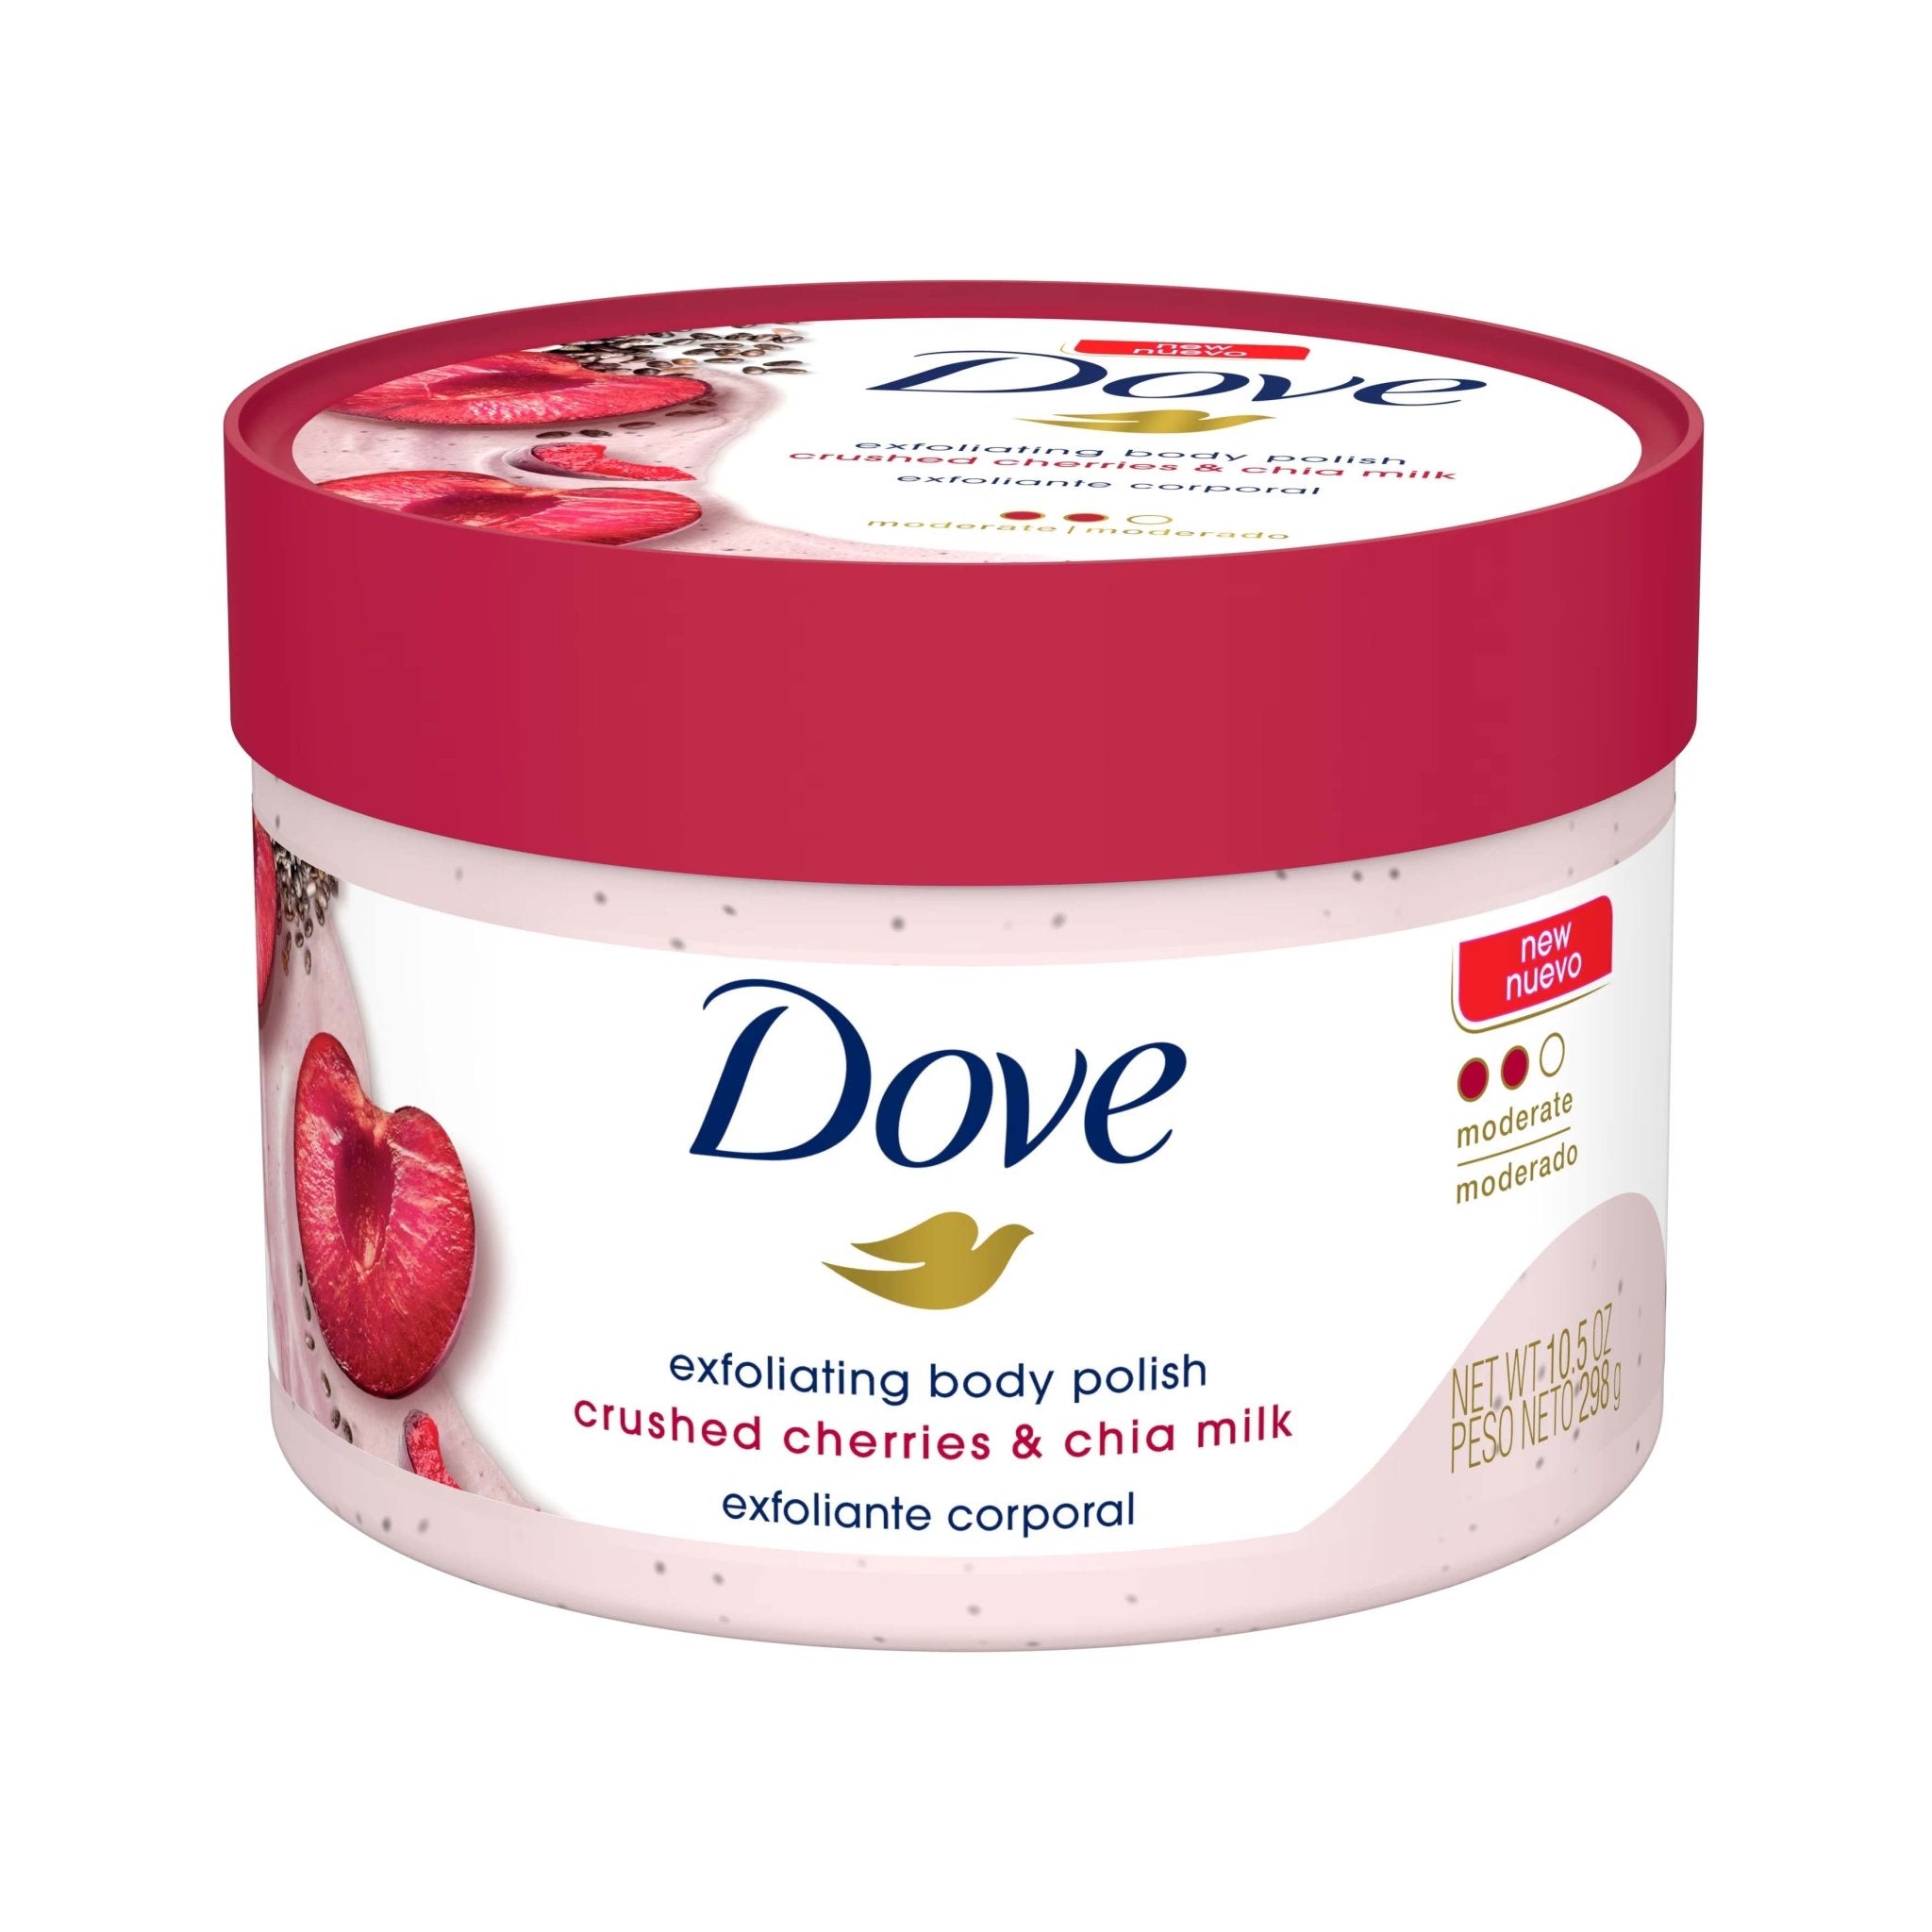 Dove Exfoliating Body Polish 298gm - Crushed Cherries & Chia Milk - Bloom Pharmacy